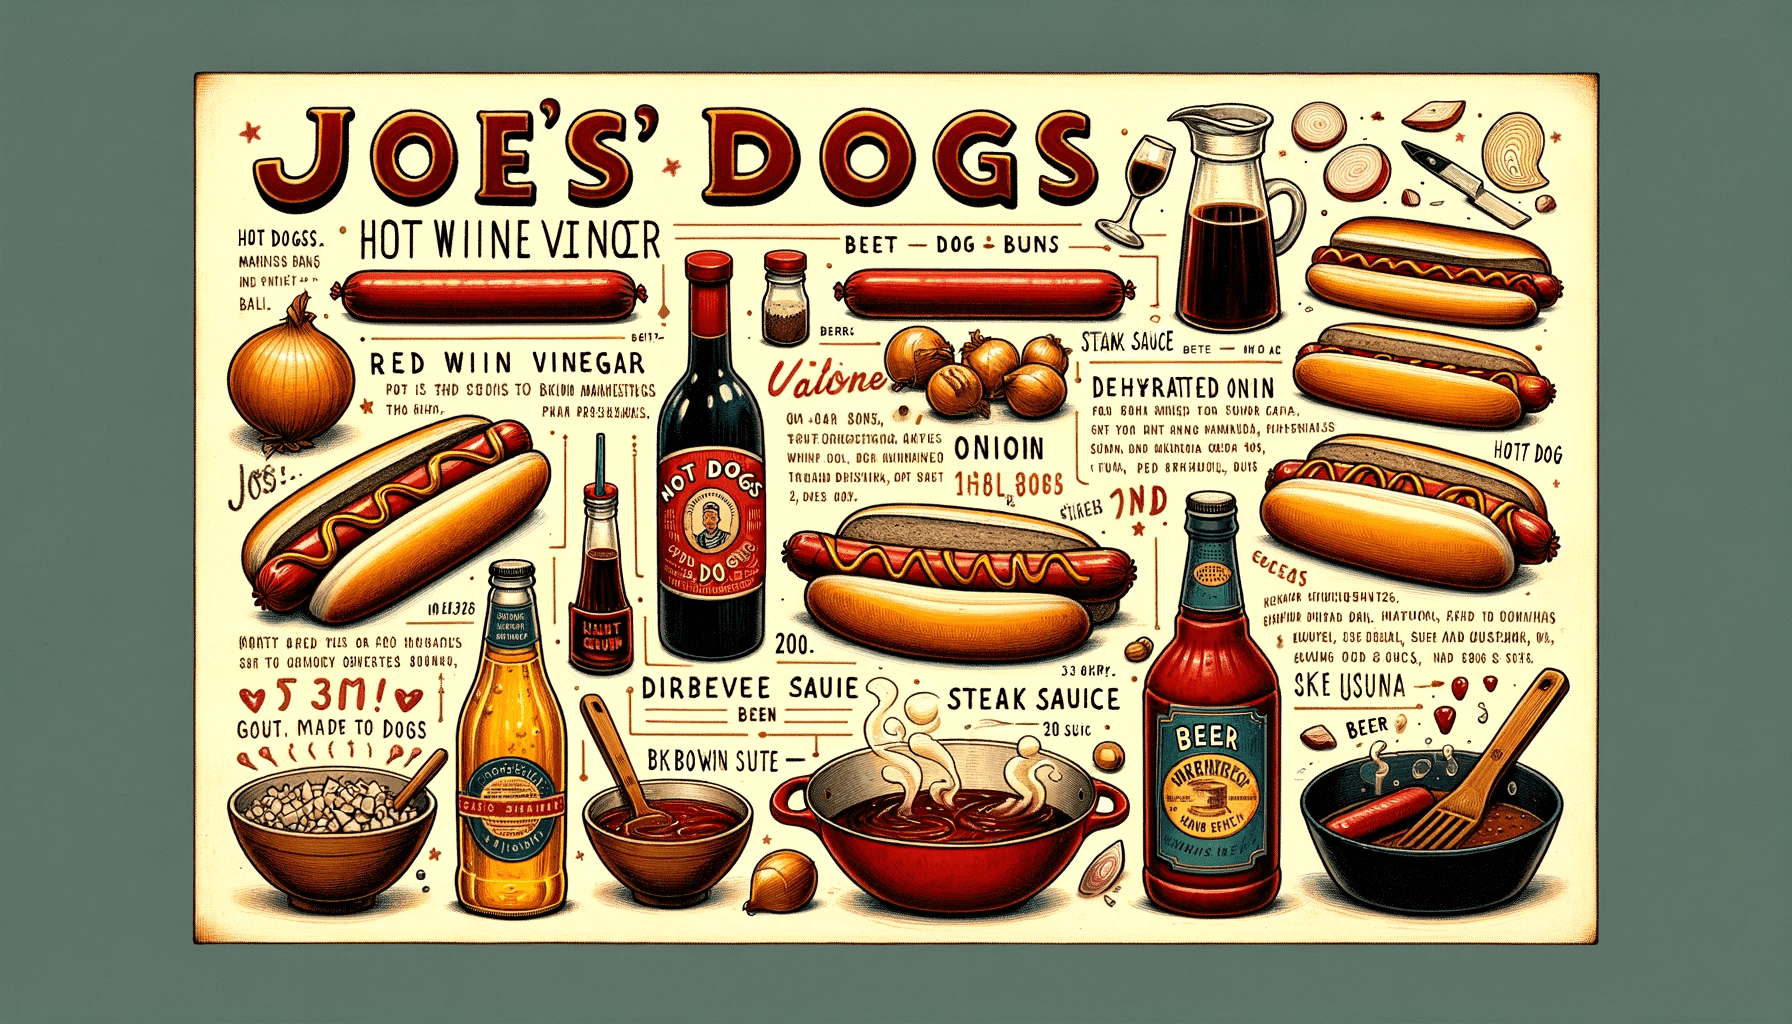 Joe's Dogs